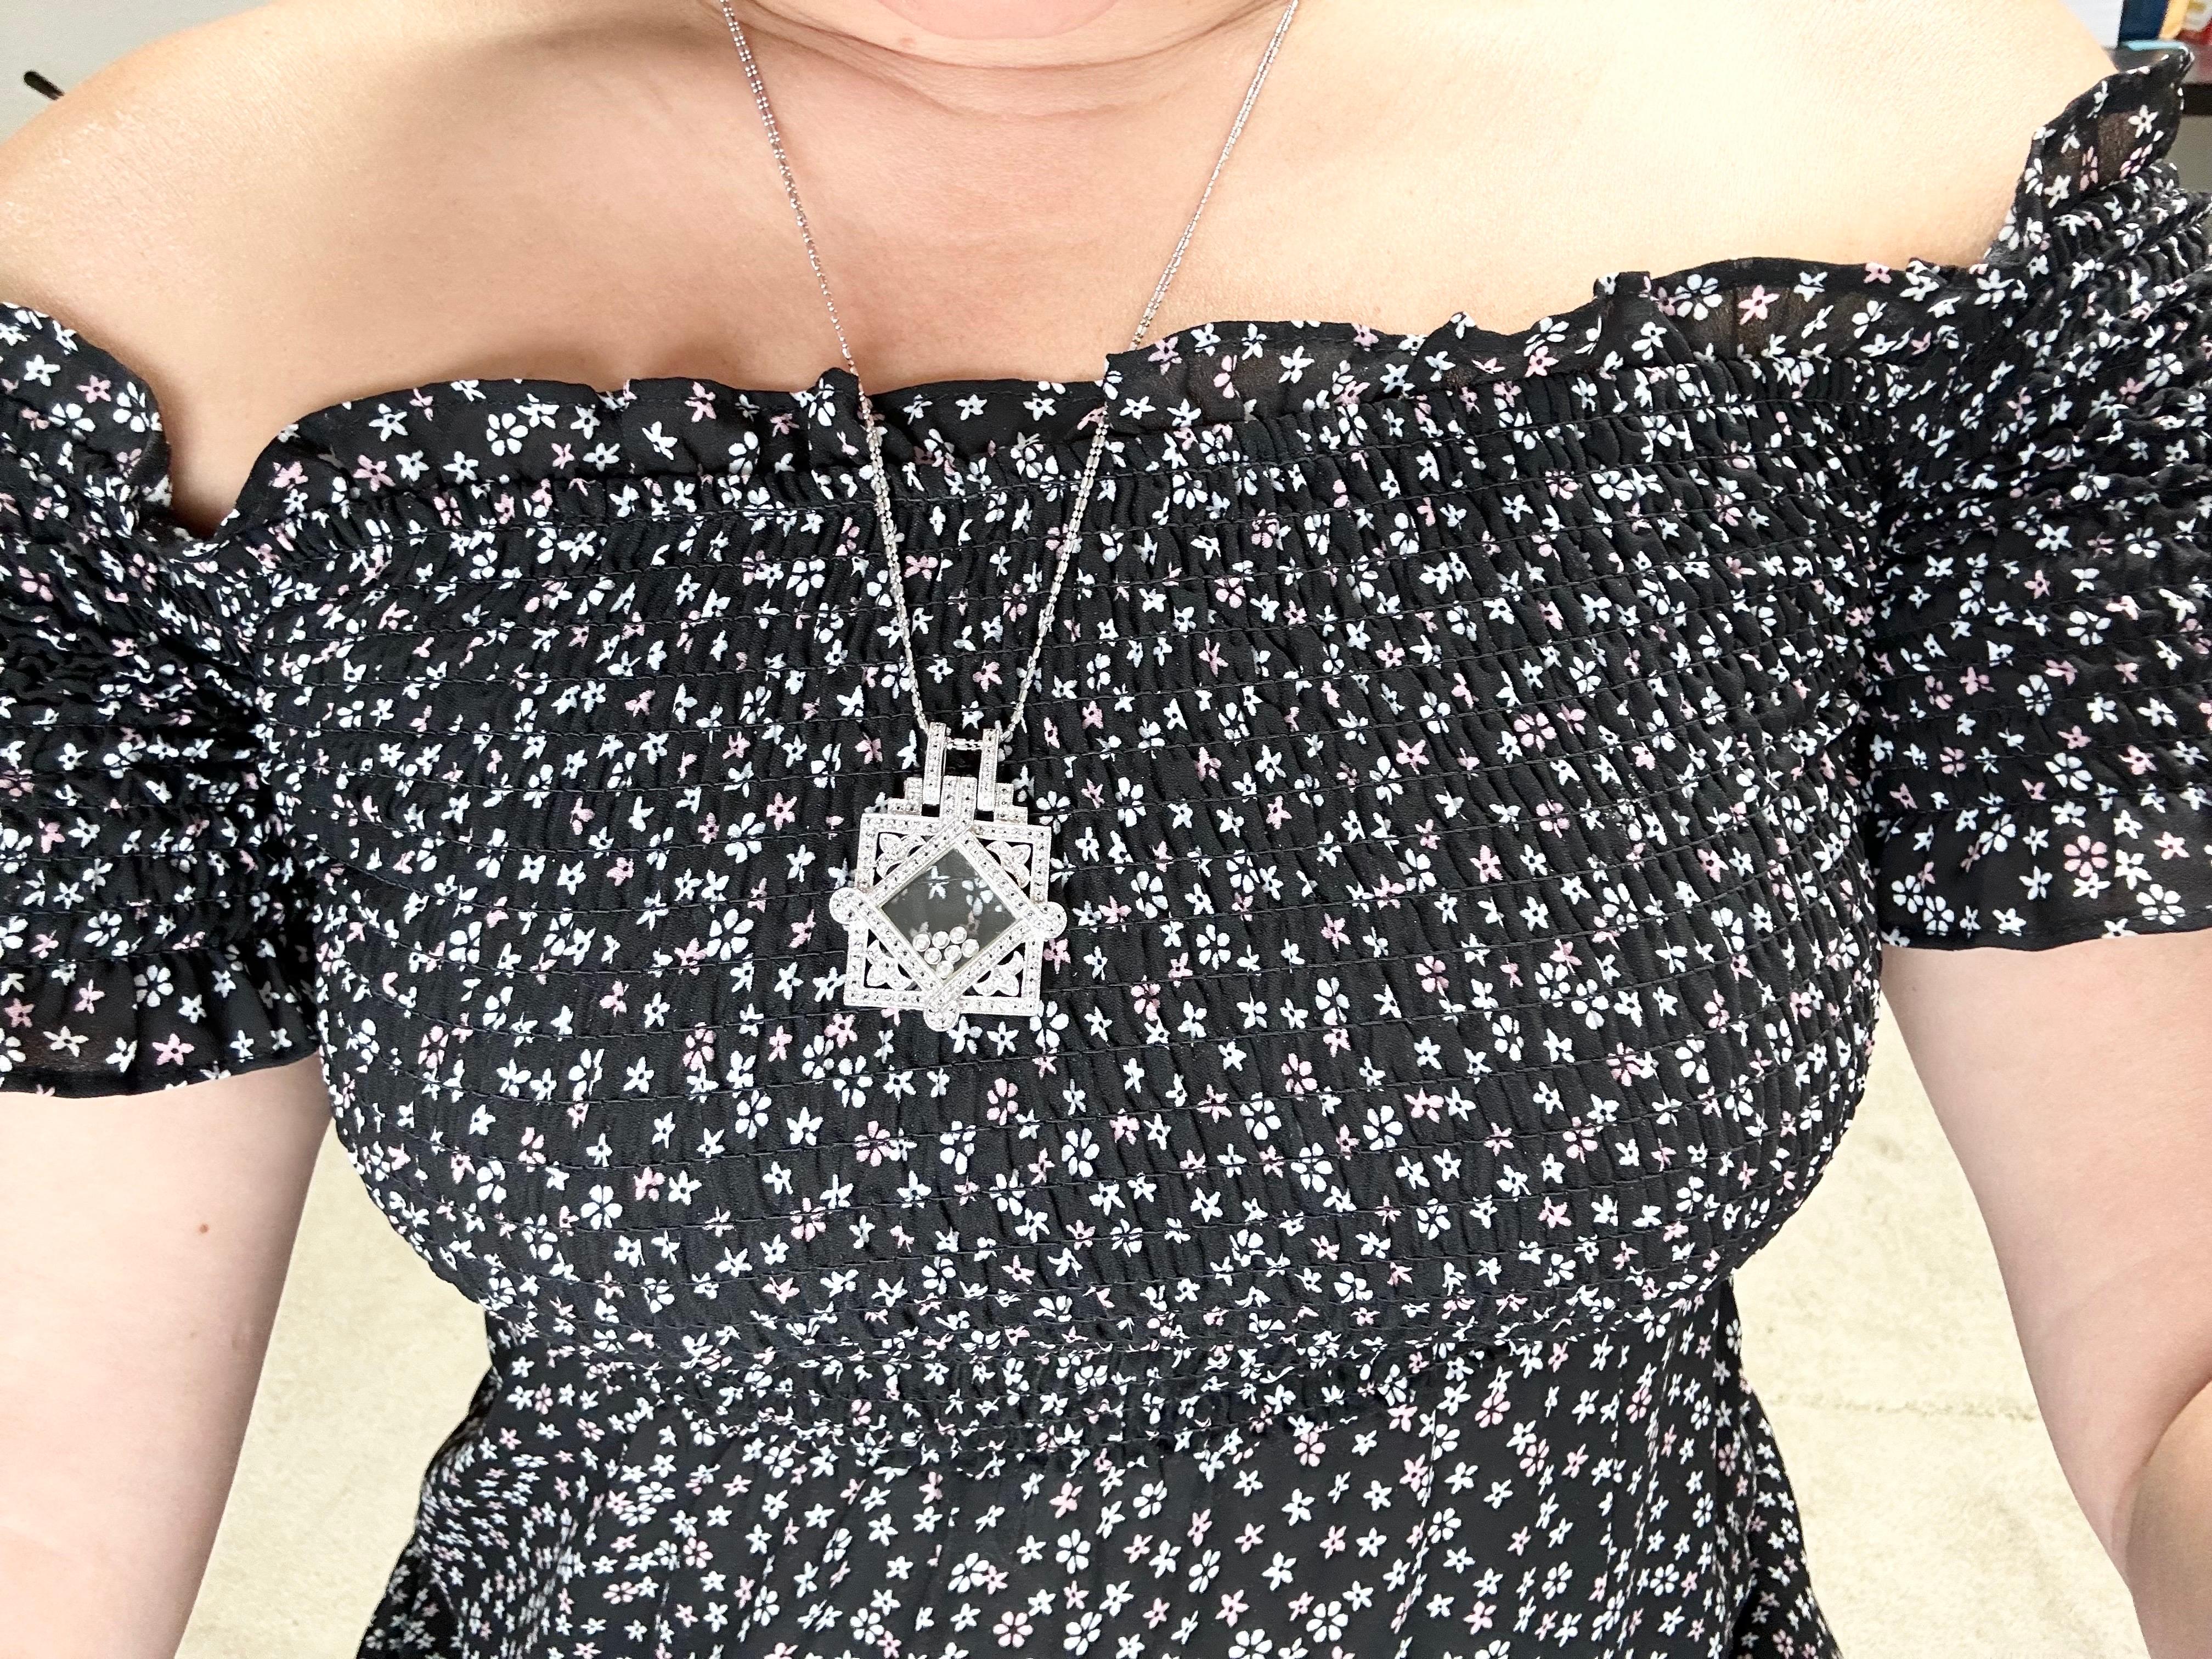 Floating diamonds pendant necklace 14KT1.18ct diamond pendant necklace 23